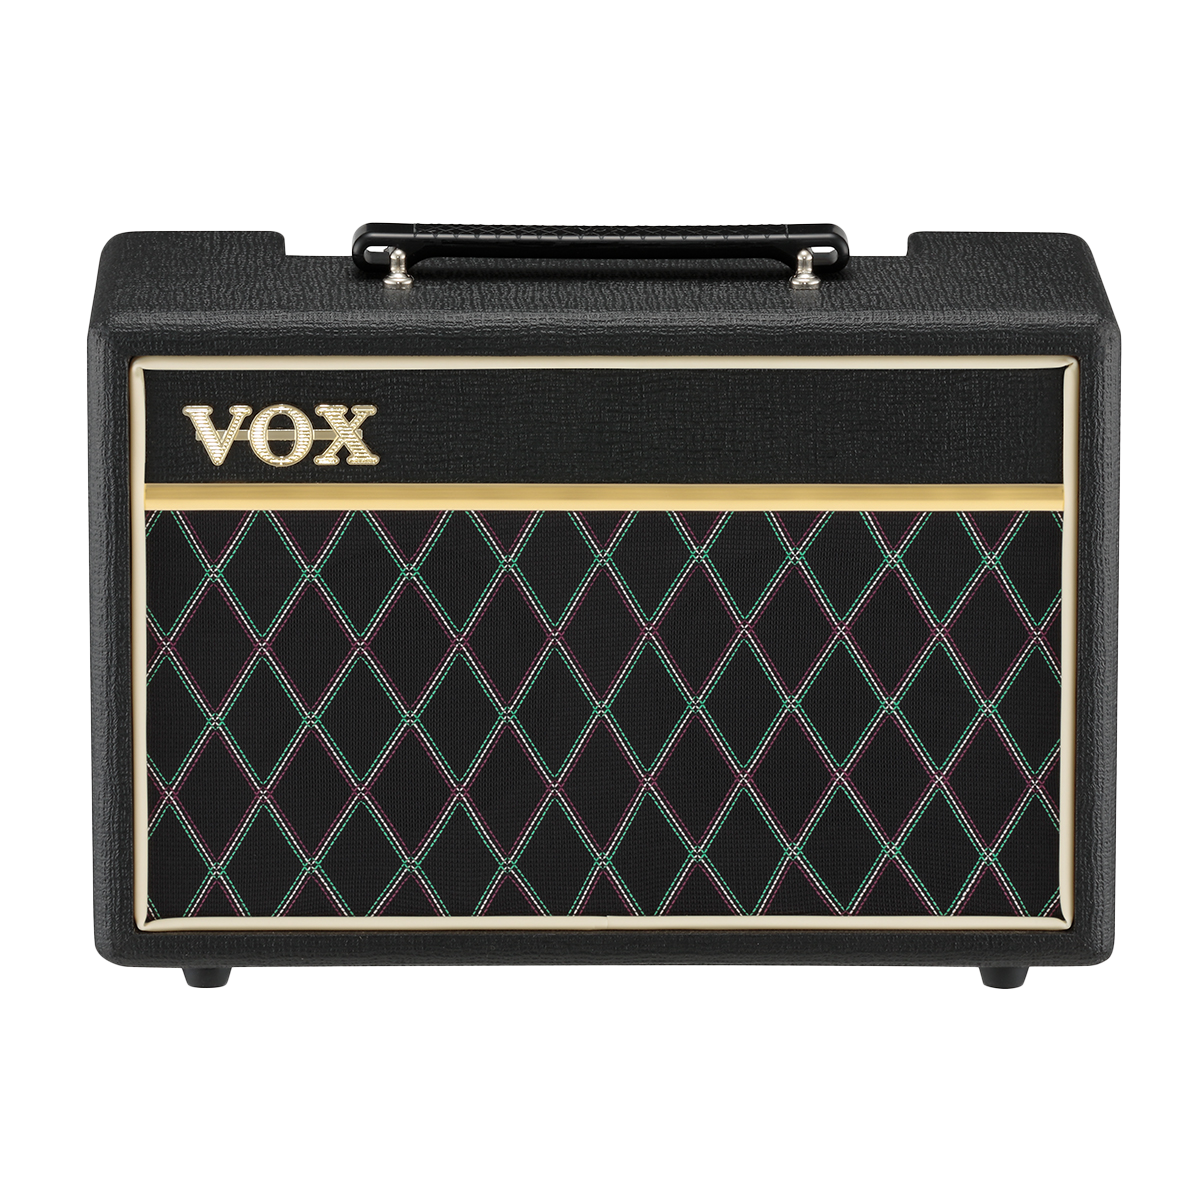 VOX Amps USA, Pathfinder Bass 10 Amplifier